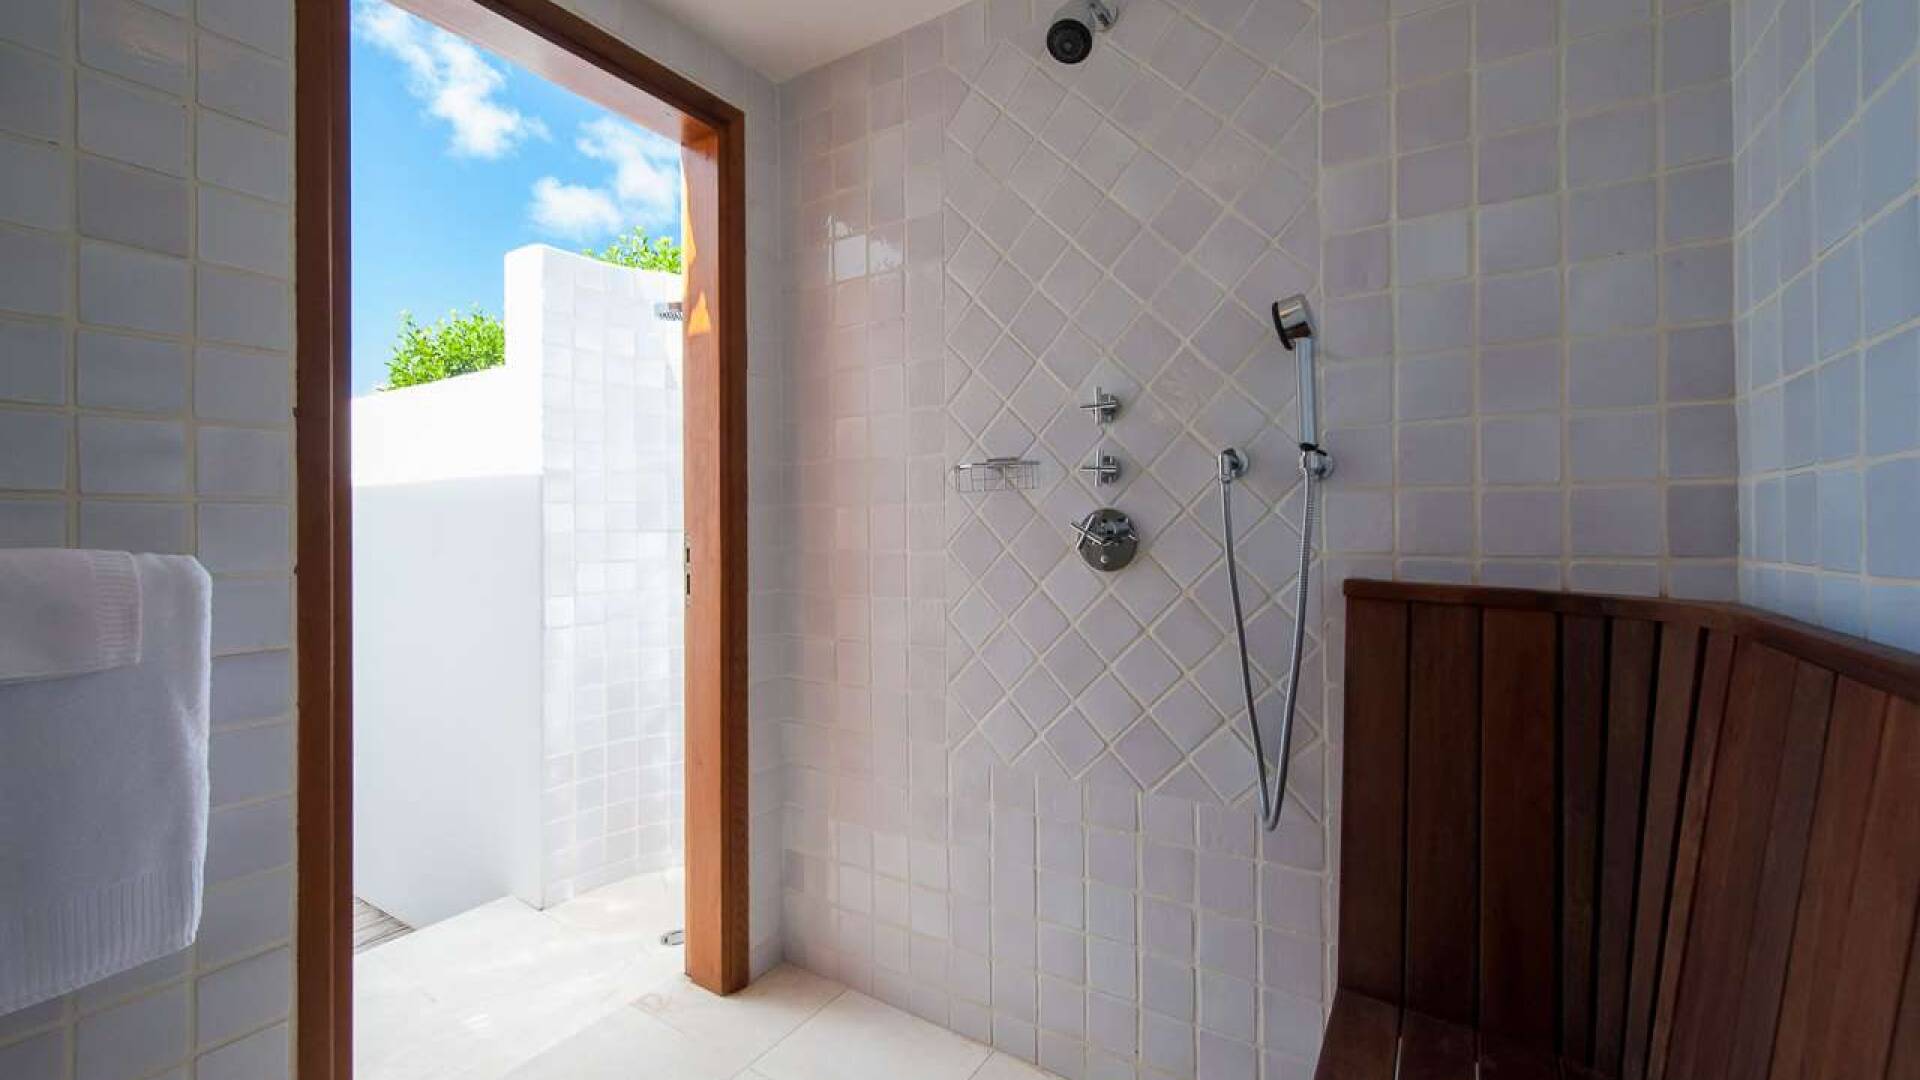 Bathroom at WV LAM, Gustavia, St. Barthelemy